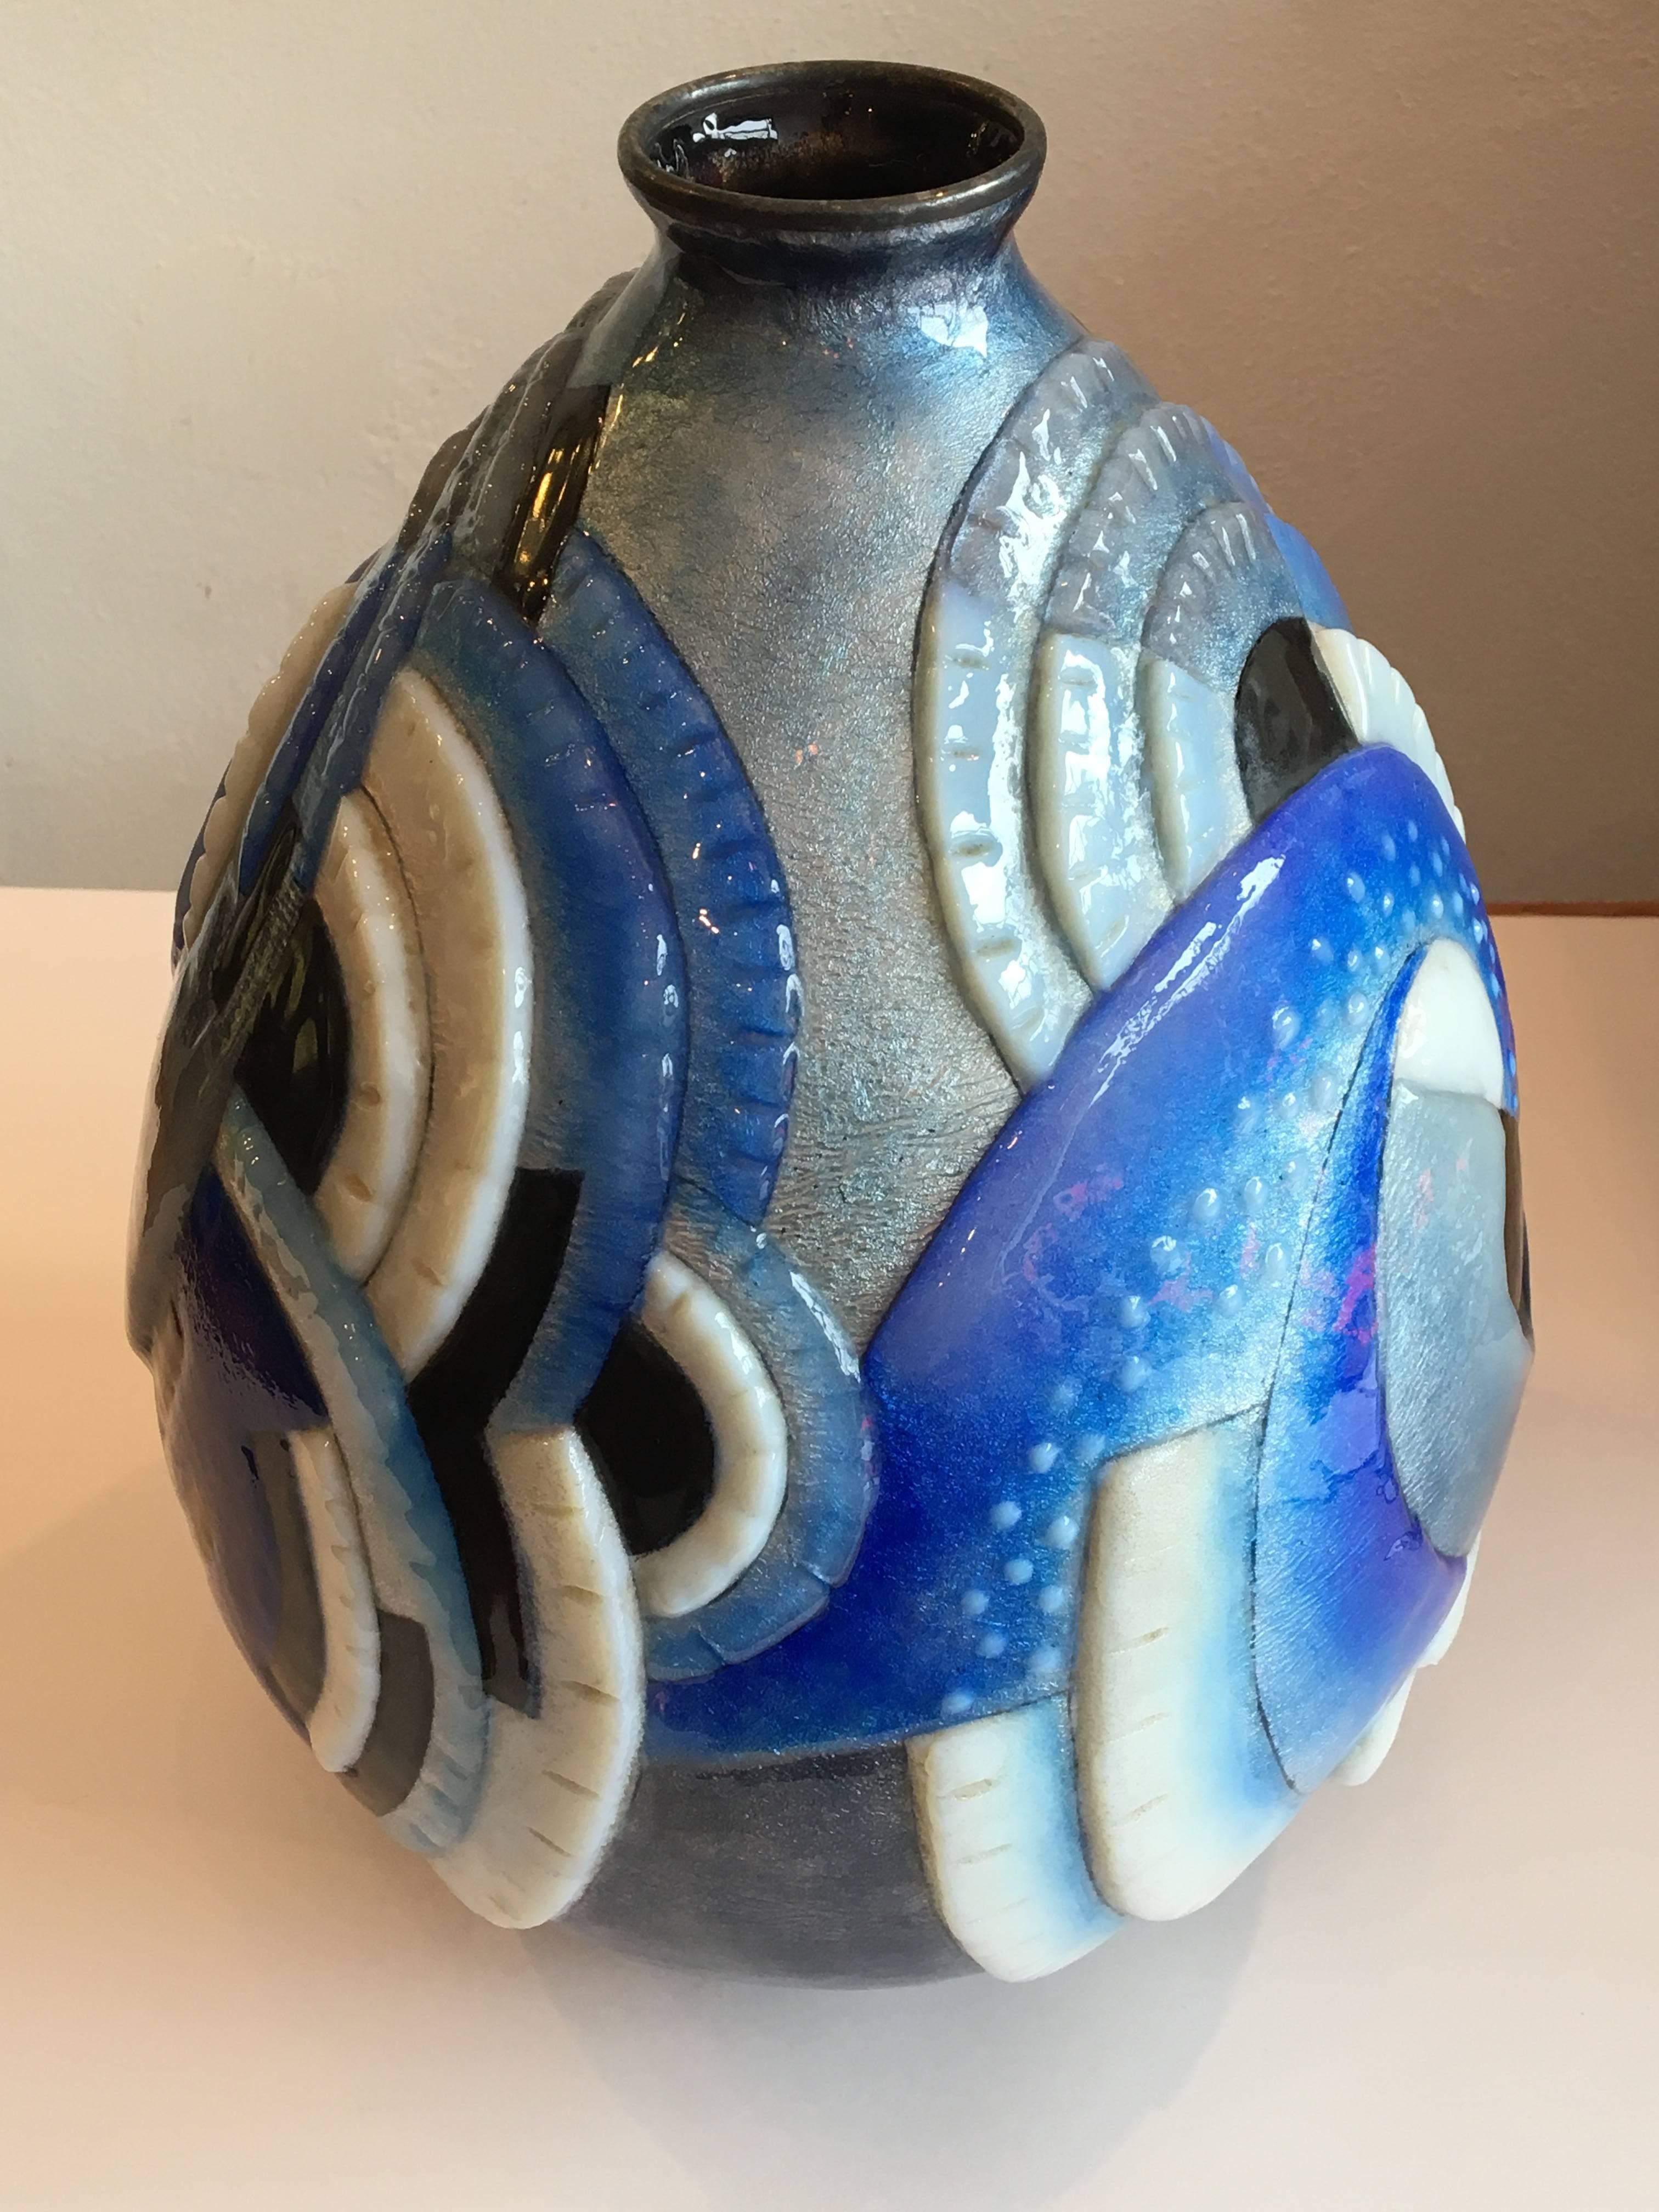 Large enameled copper vase with Geometric pattern of blue, gray, white, black.
White dots on the blue part makes this vase more unique.
Signed, C.FAURE Limoges
Measure: H. 30.5cm, D. 23cm.